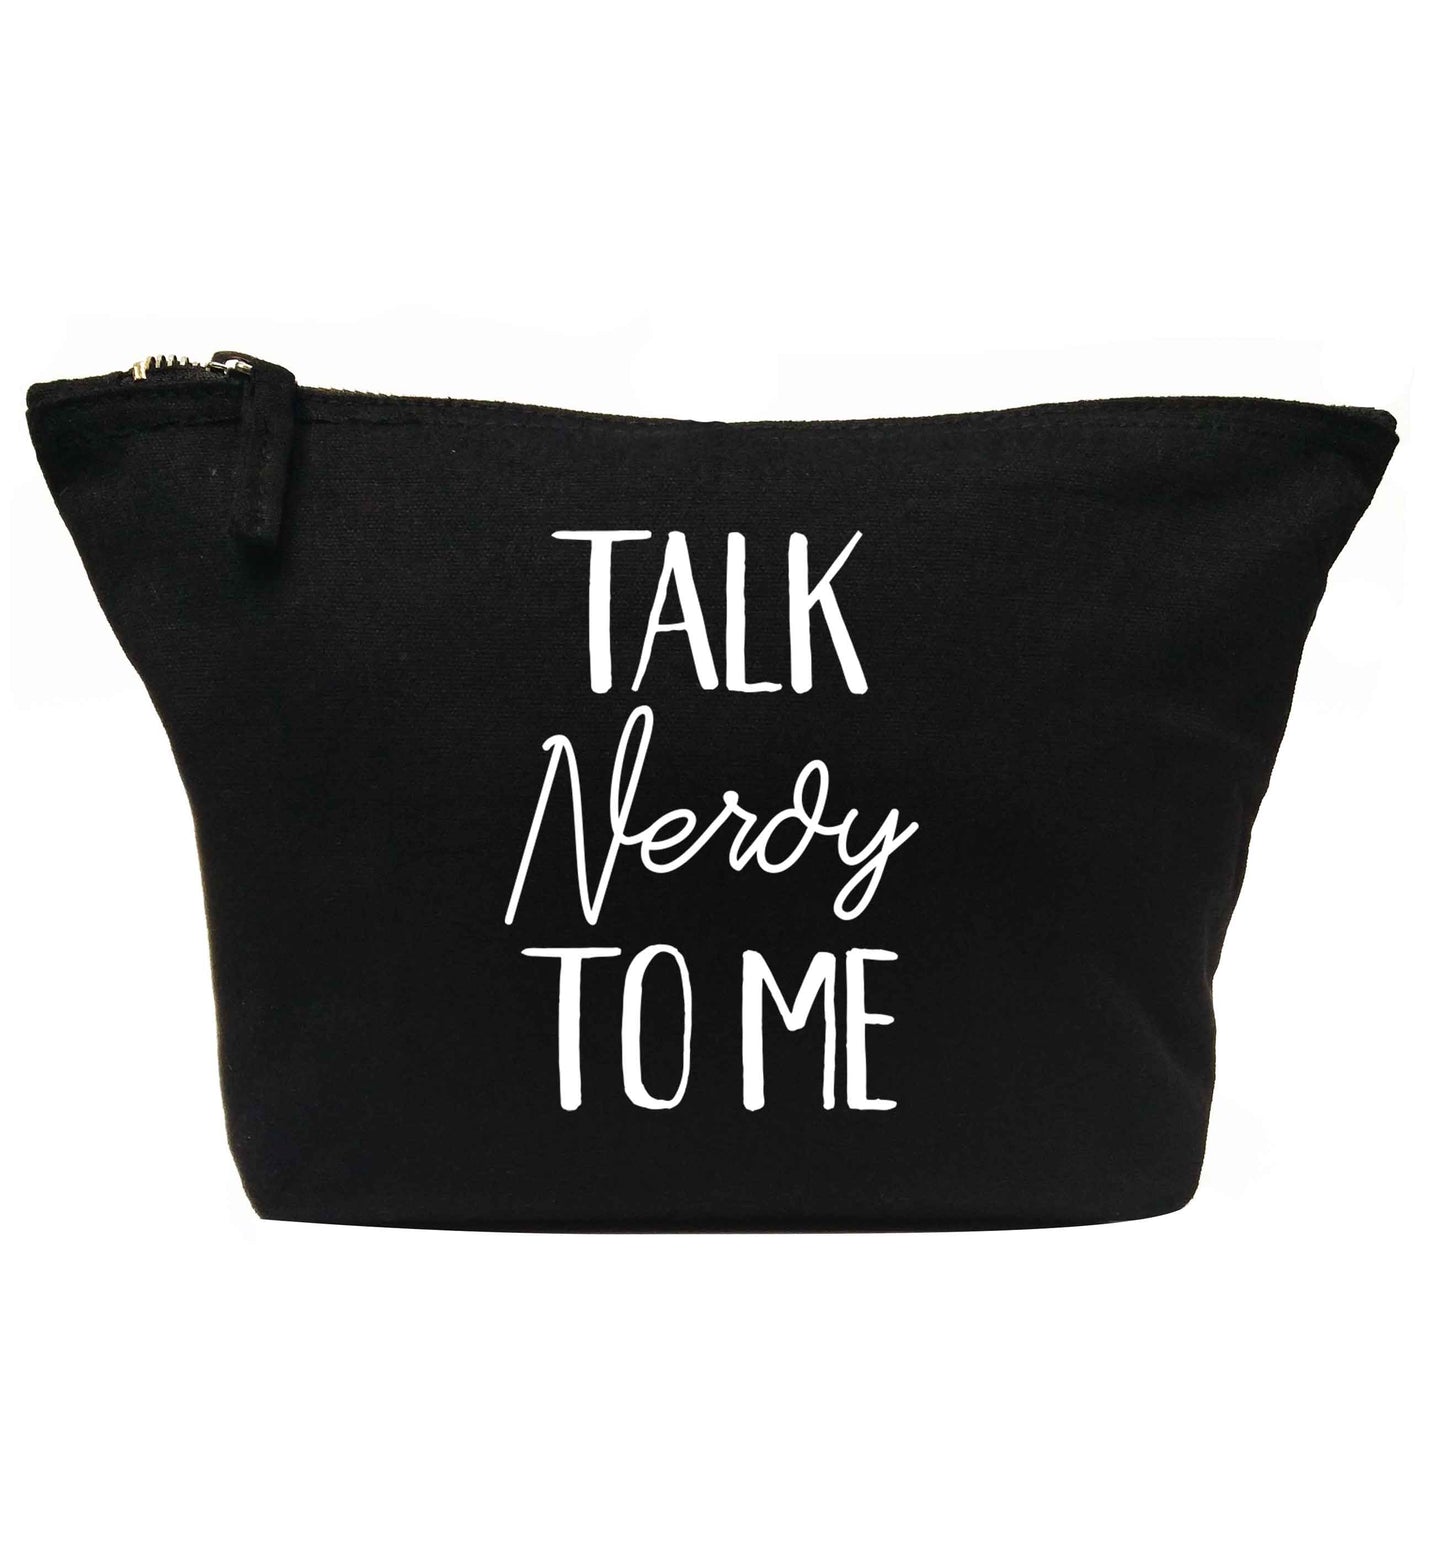 Talk nerdy to me | Makeup / wash bag